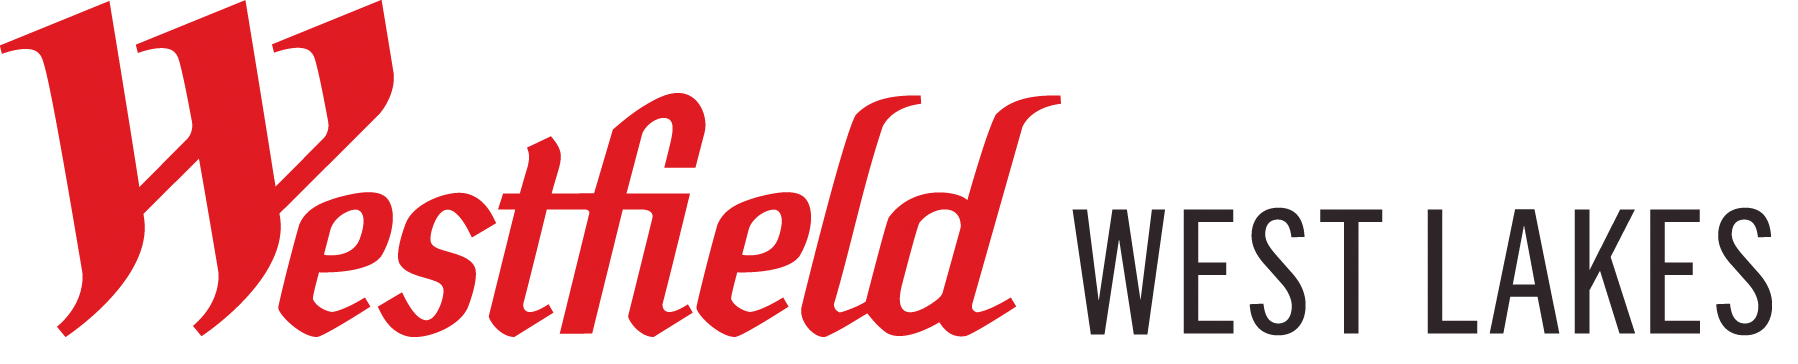 westfield-west-lakes-logo2